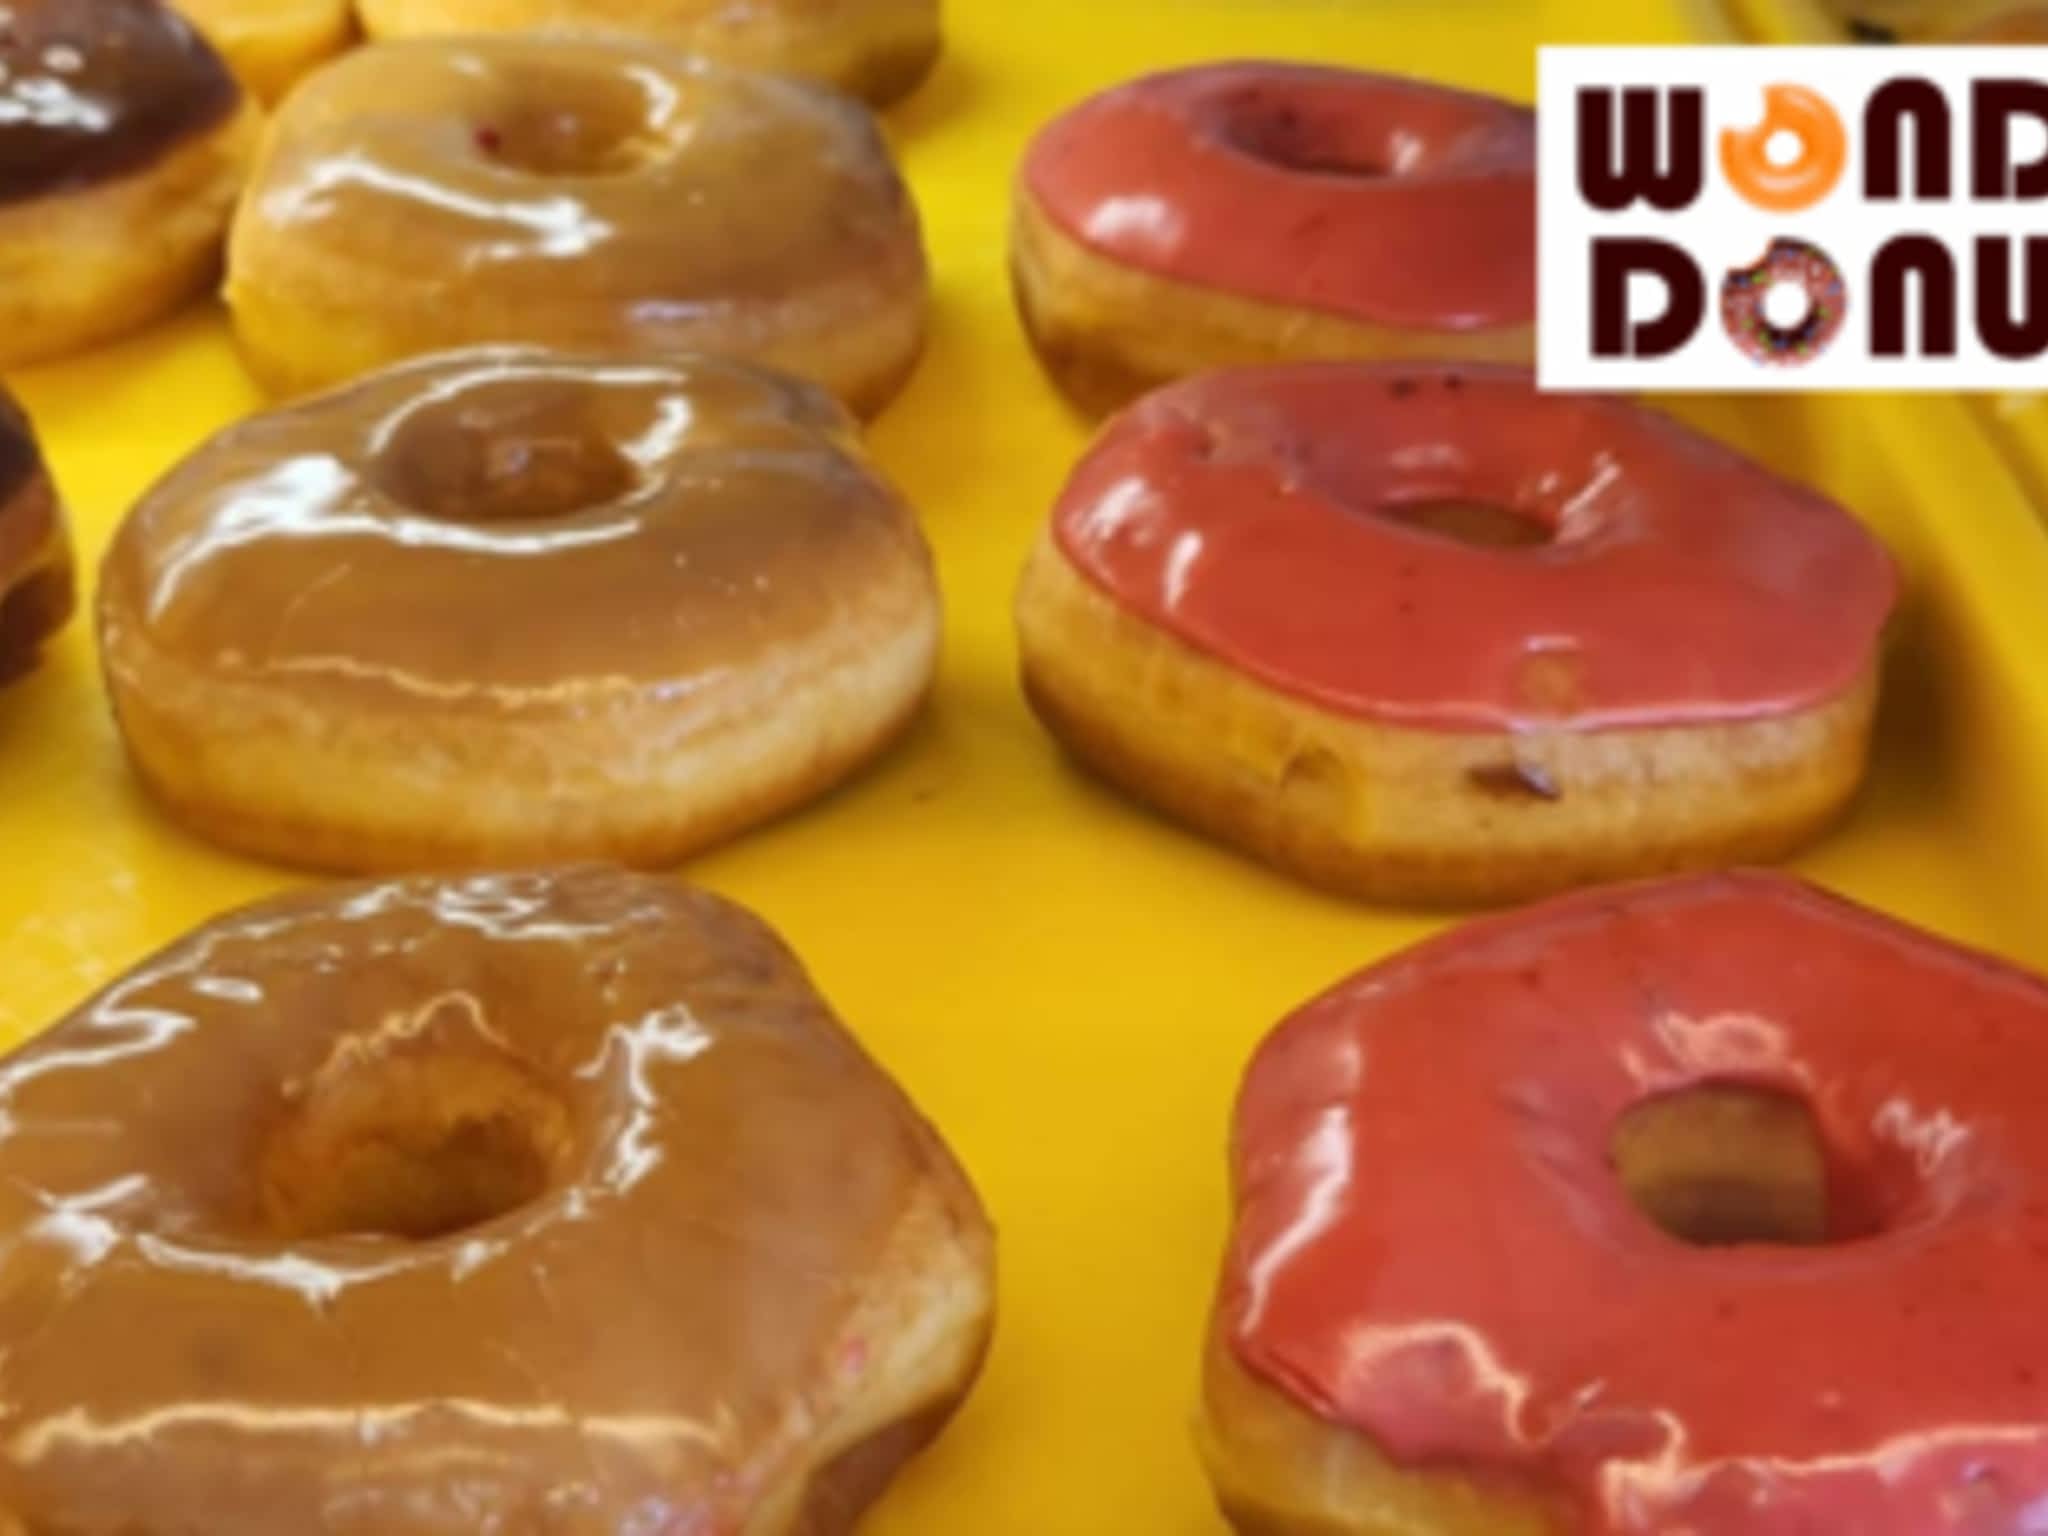 photo Wonder Donuts